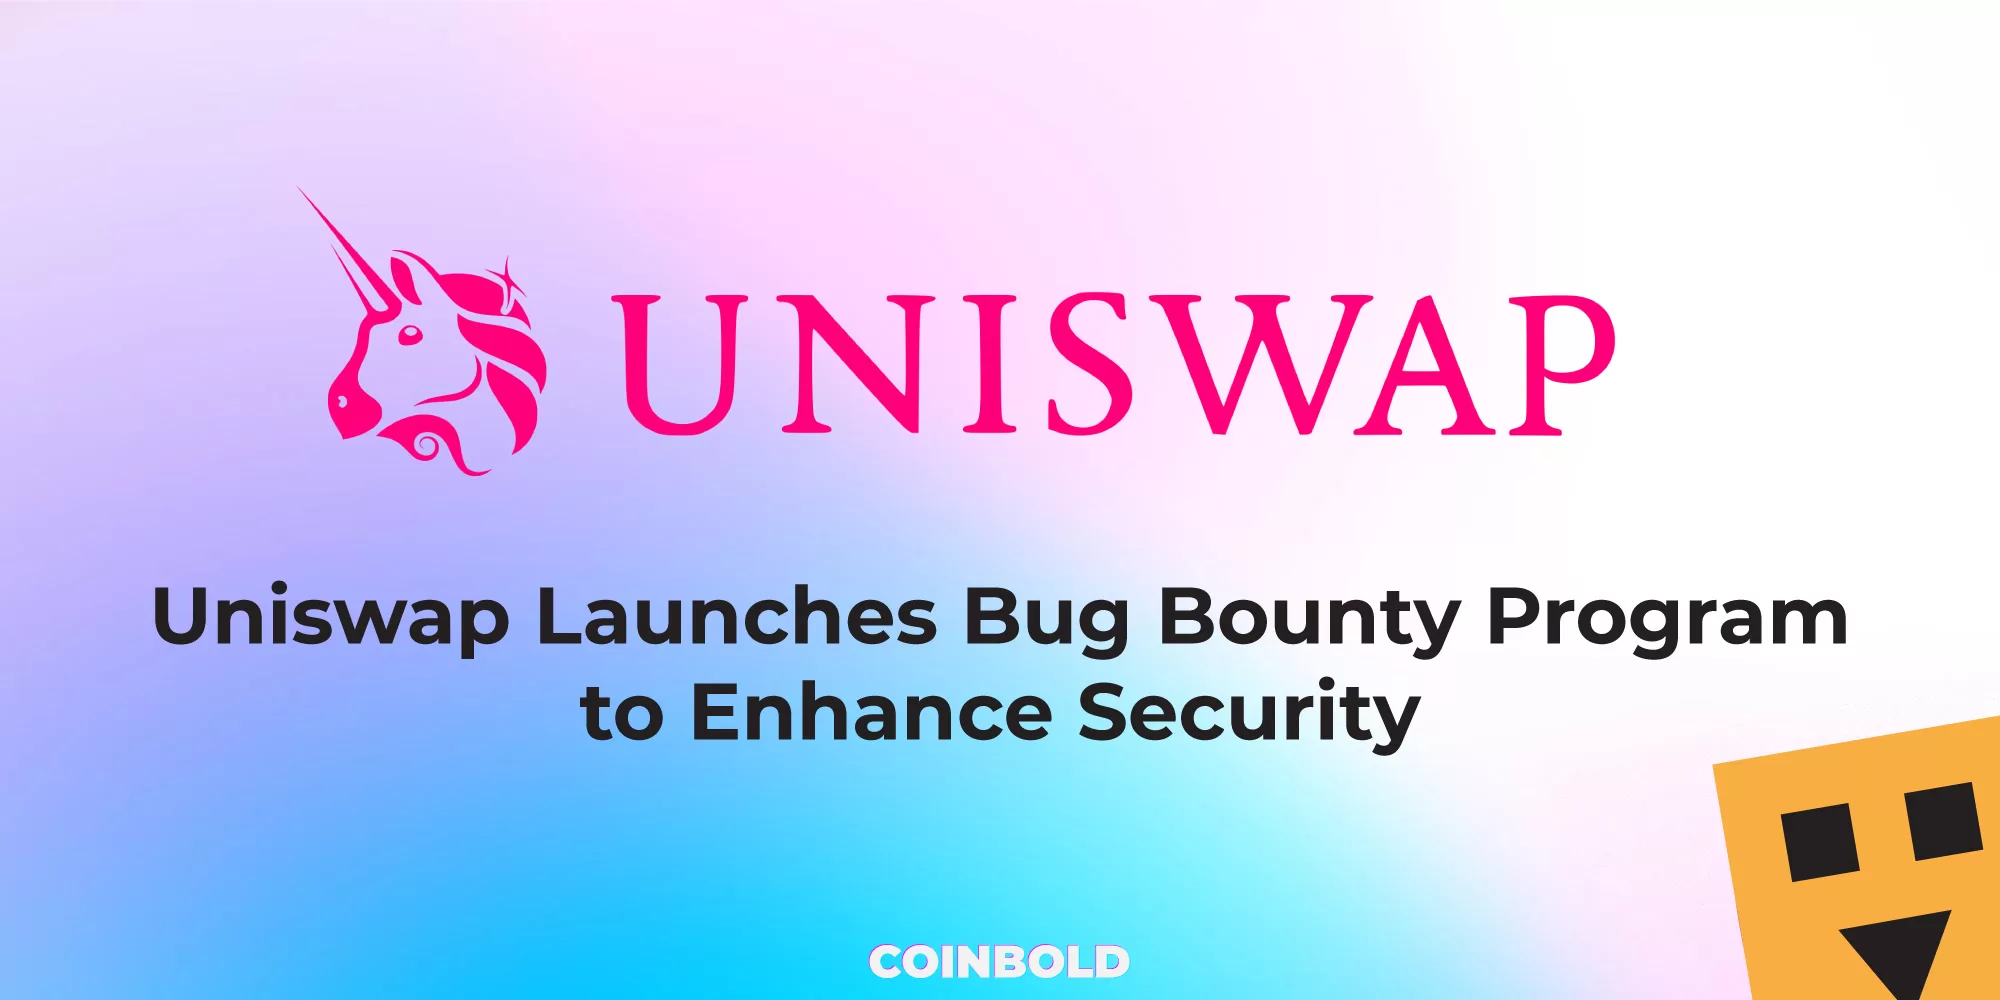 Uniswap Launches Bug Bounty Program to Enhance Security